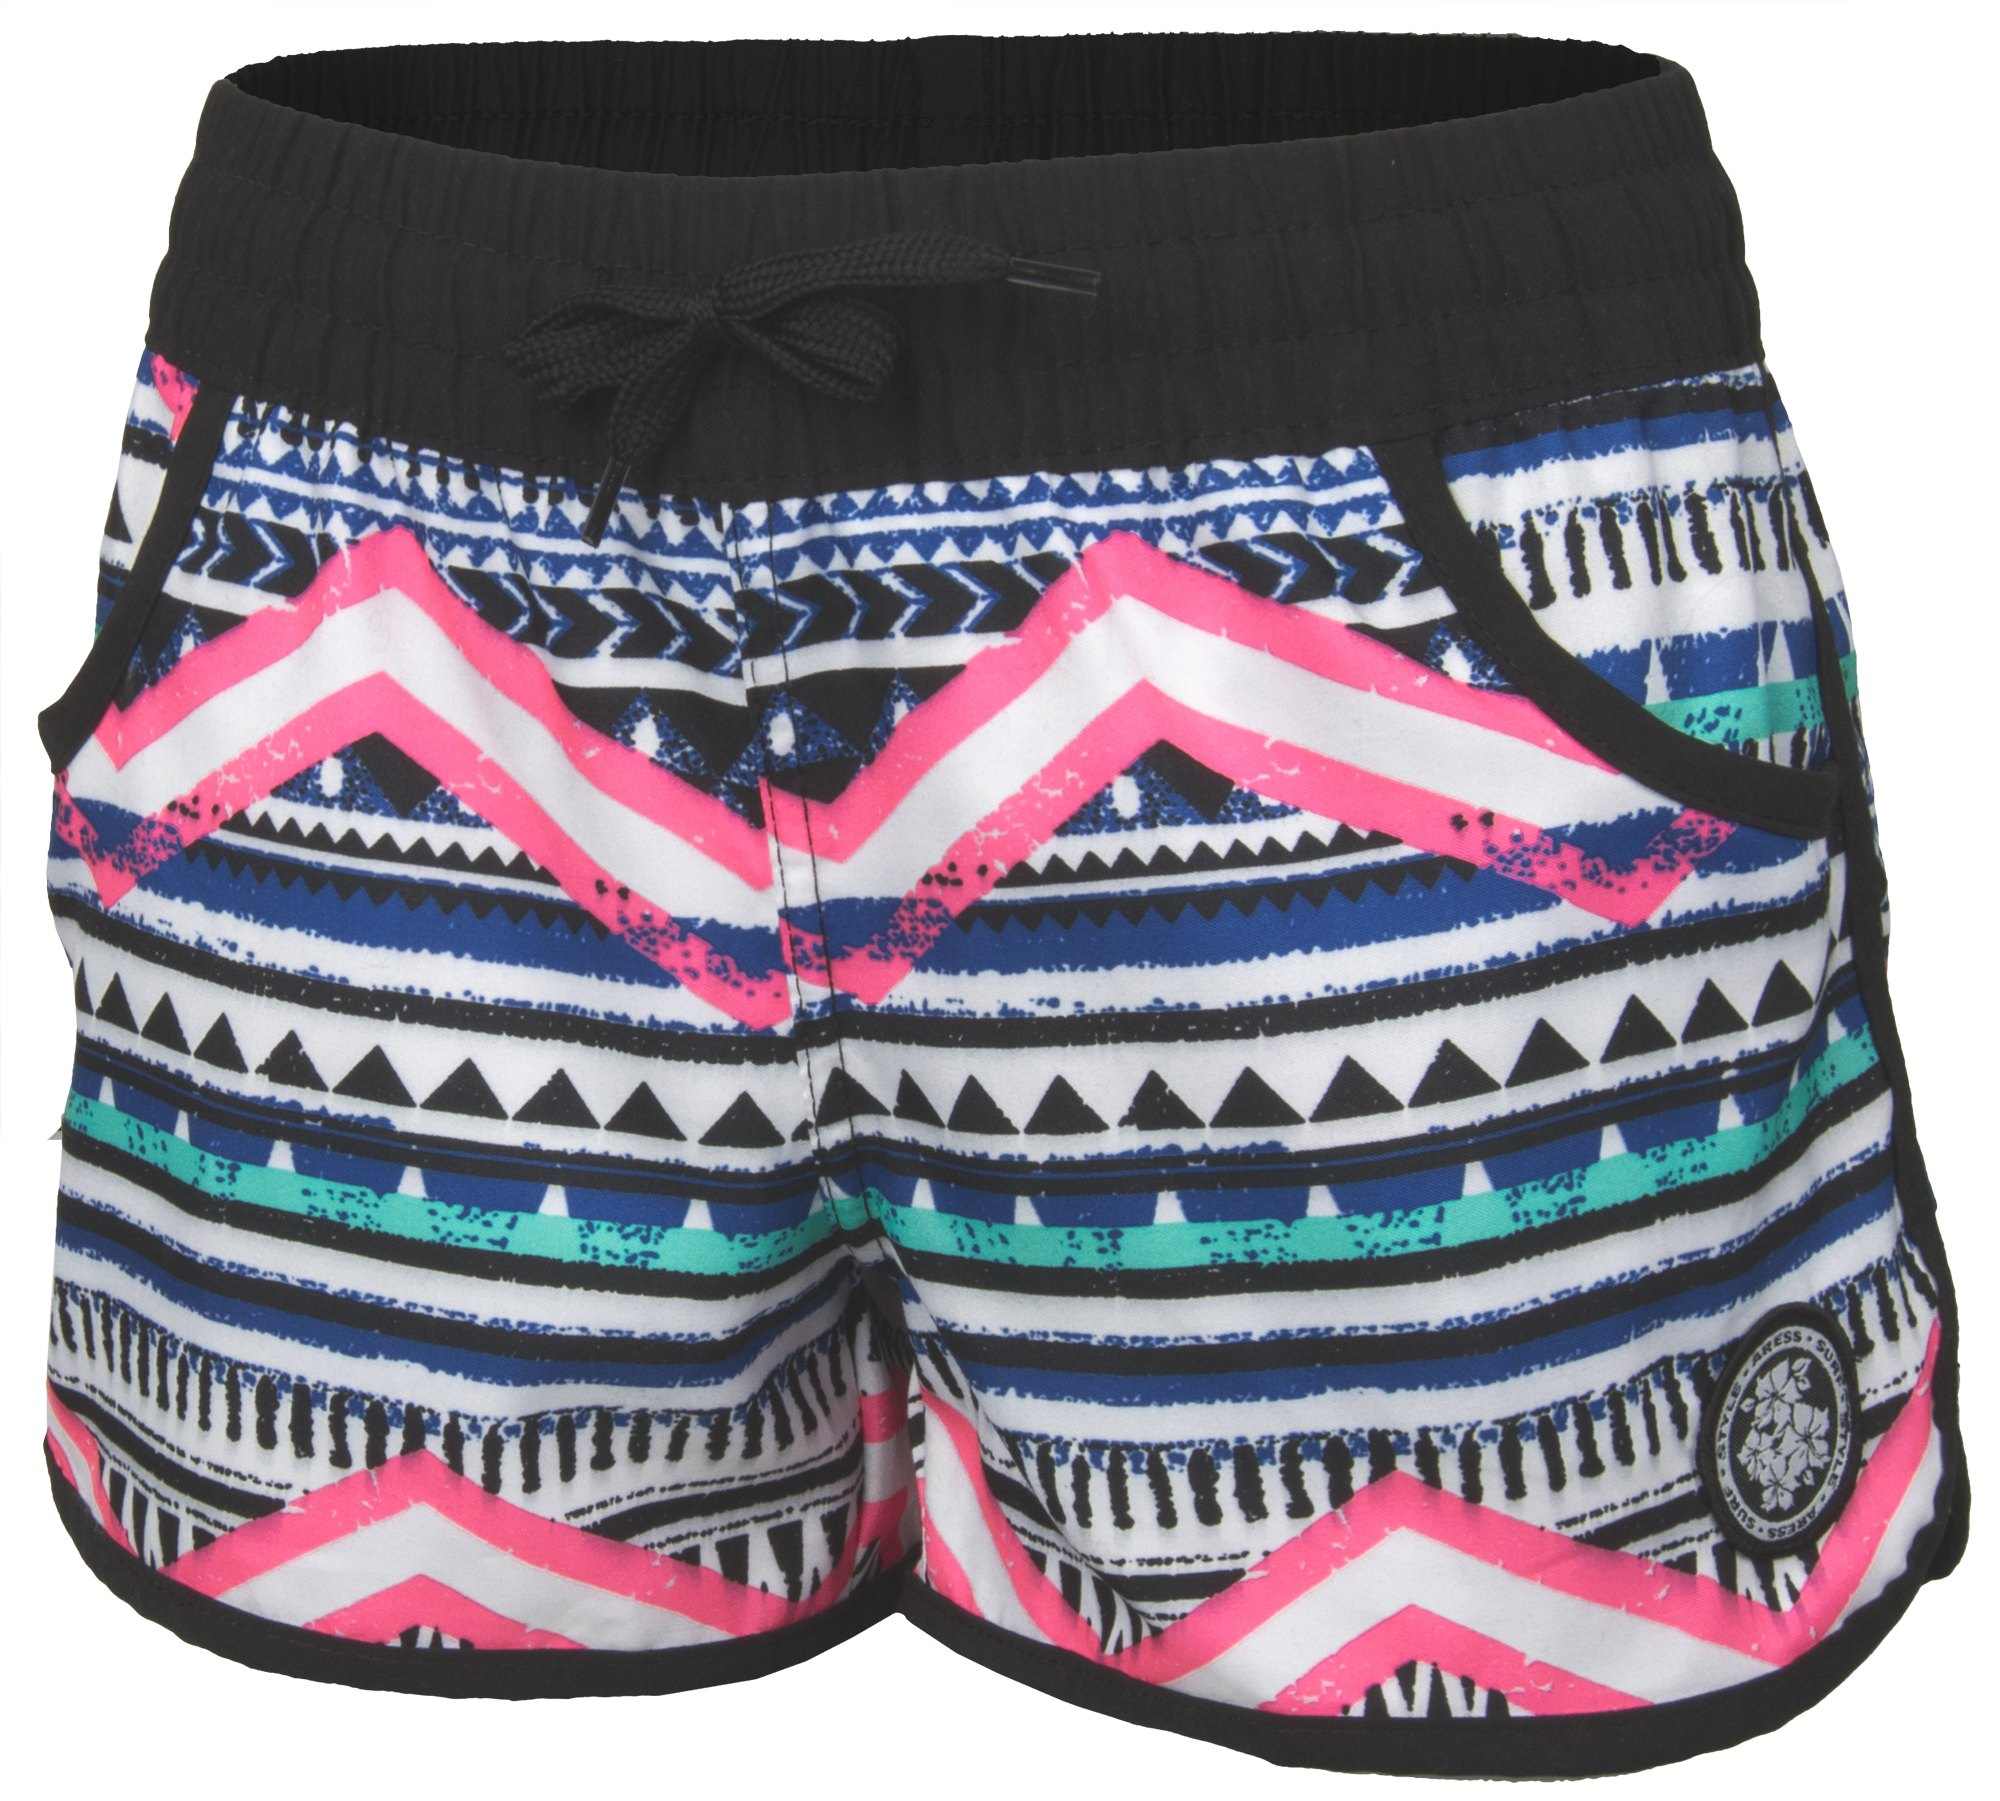 Girls’ shorts